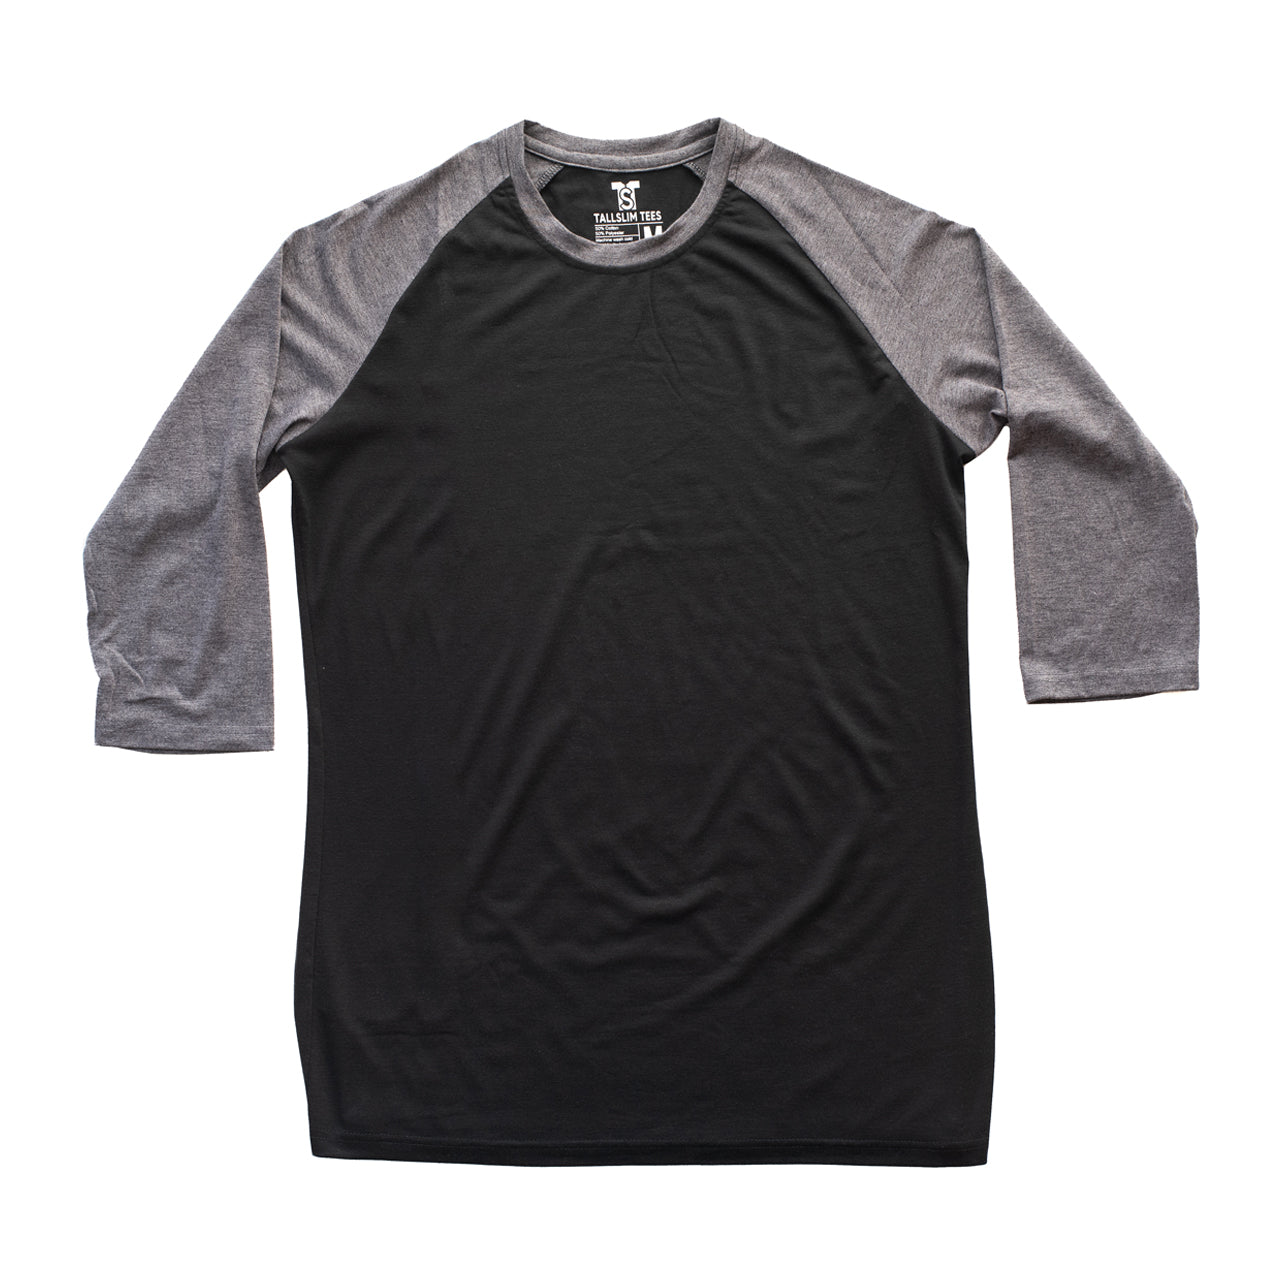 Black and Gray Raglan 3/4 Sleeve Shirt For Tall Slim Men